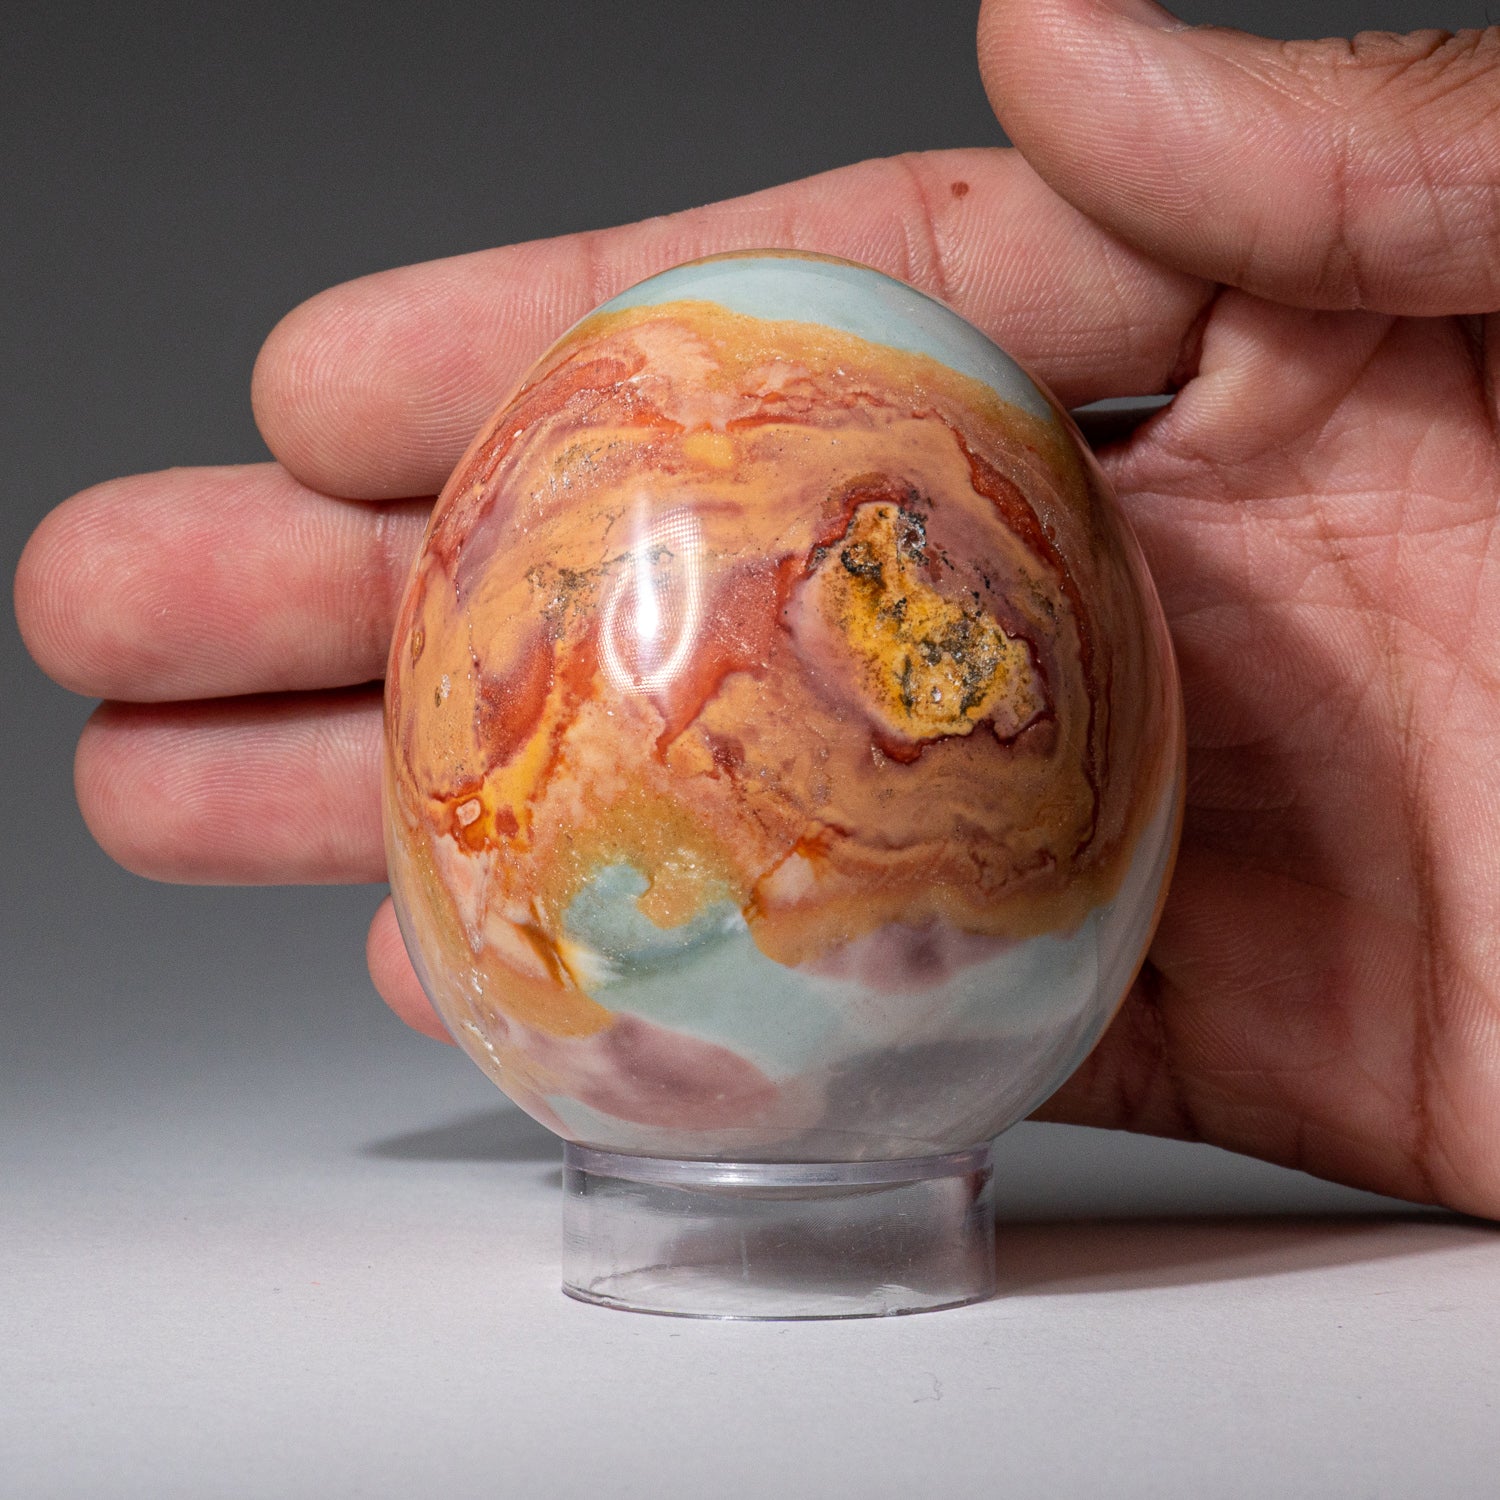 Genuine Polished Polychrome Egg from Madagascar (321.6 grams)